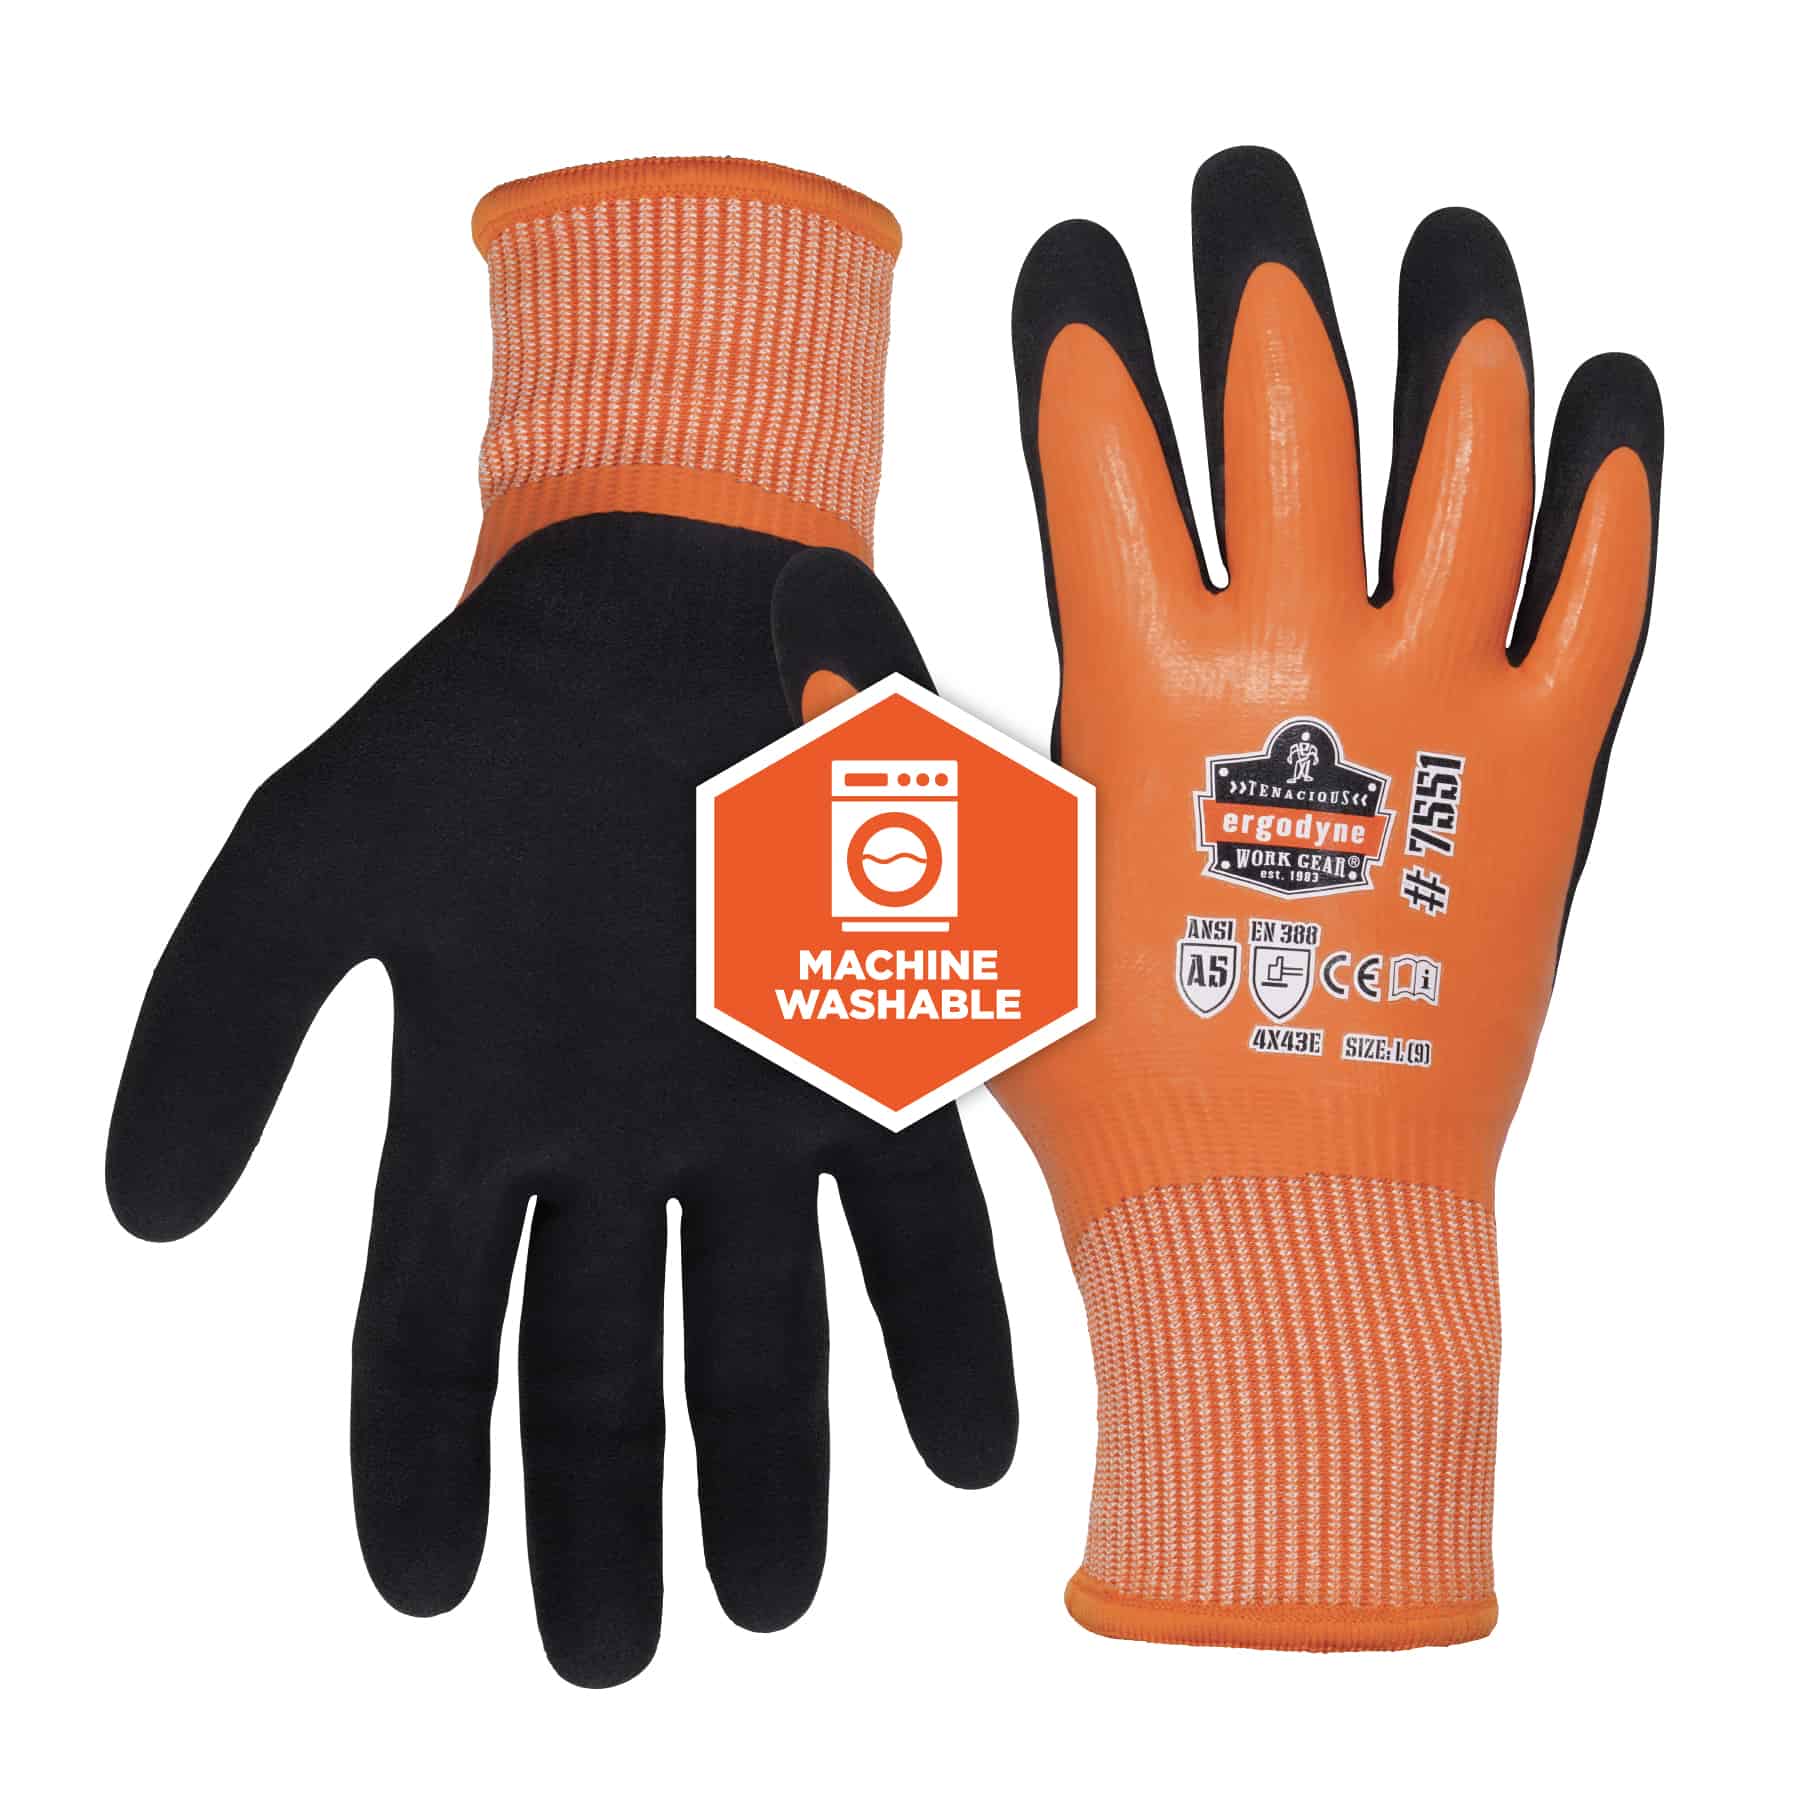 SAFEGEAR PVC Vinyl Work Gloves X-Large, 3 Pairs - EN388 Cut-Resistant  Orange Textured Gloves for Men and Women, Oil & Grease Resistance 